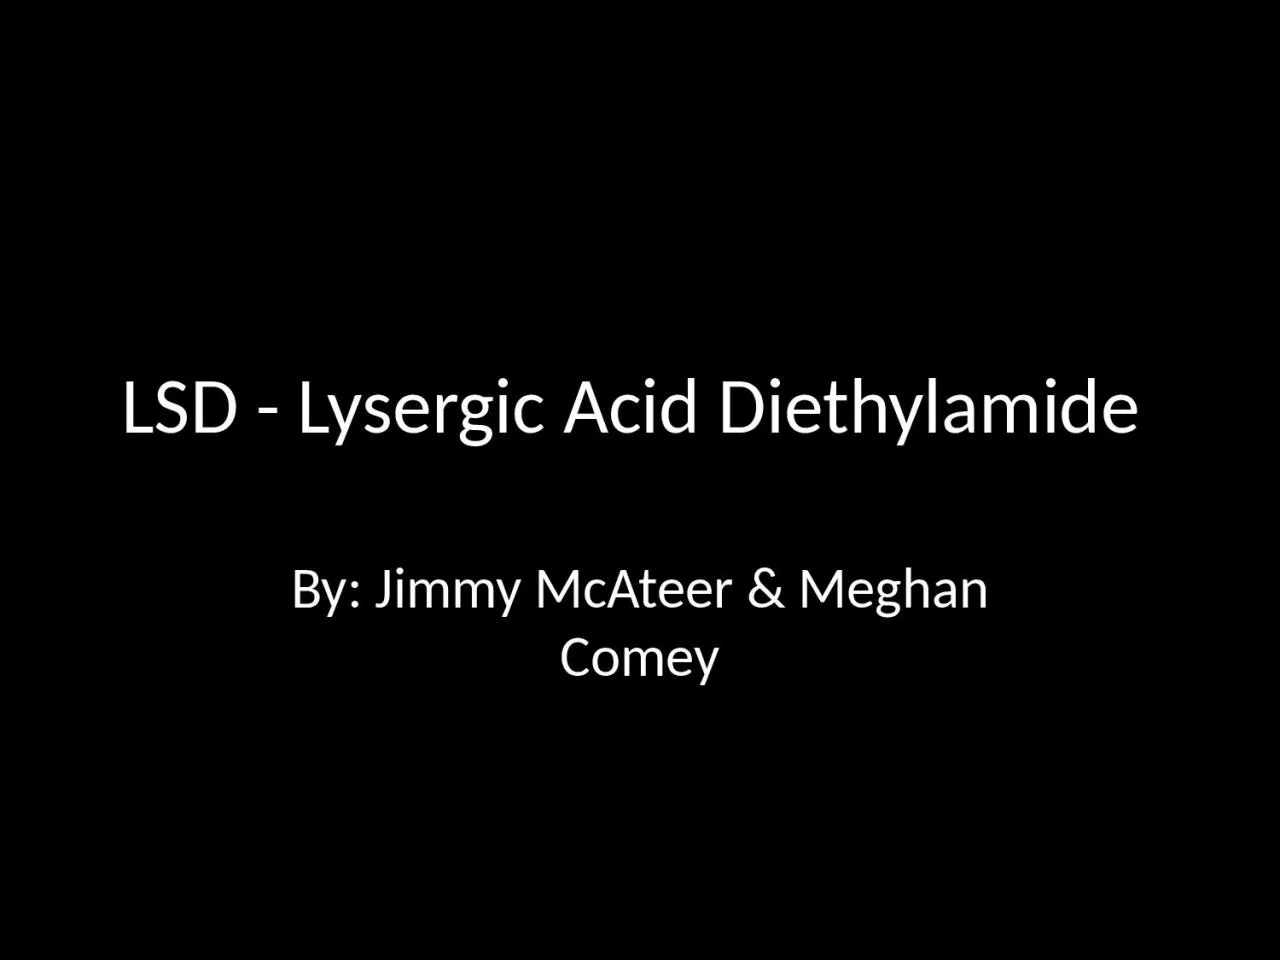 LSD - Lysergic Acid Diethylamide